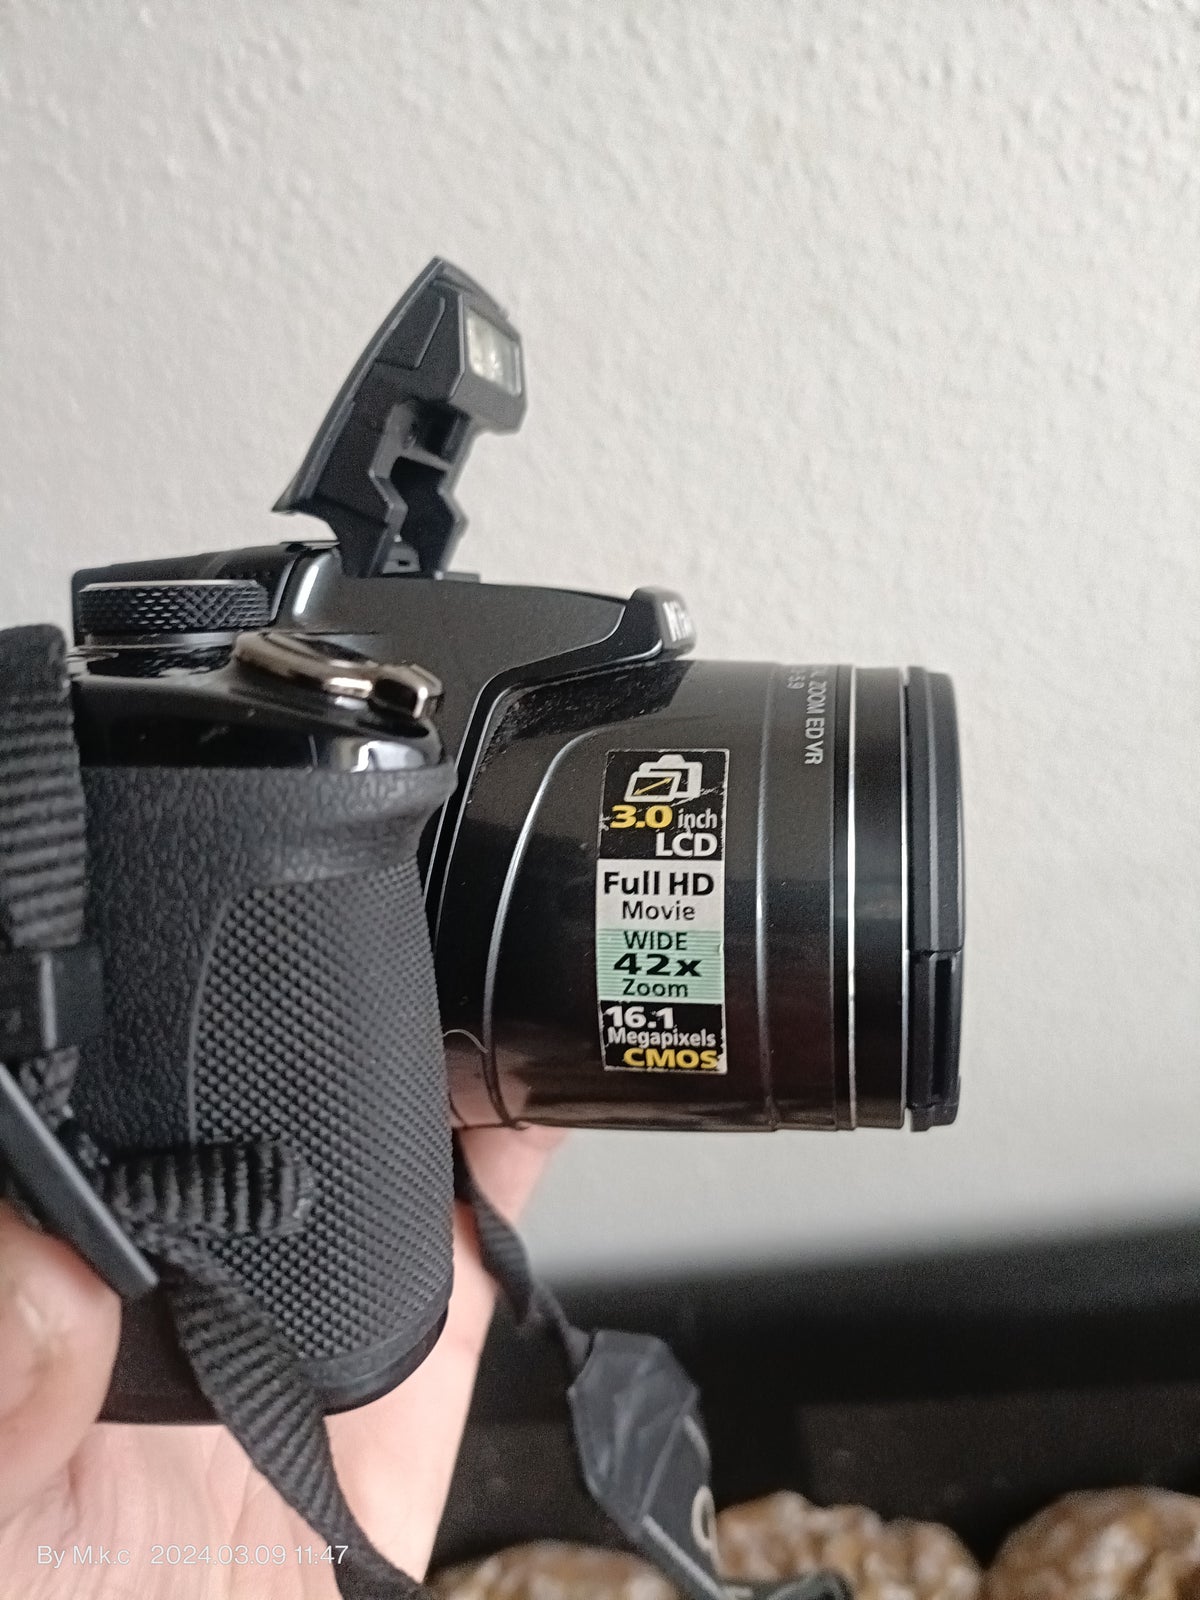 Nikon Coolpix p510, spejlrefleks, 16.1 megapixels